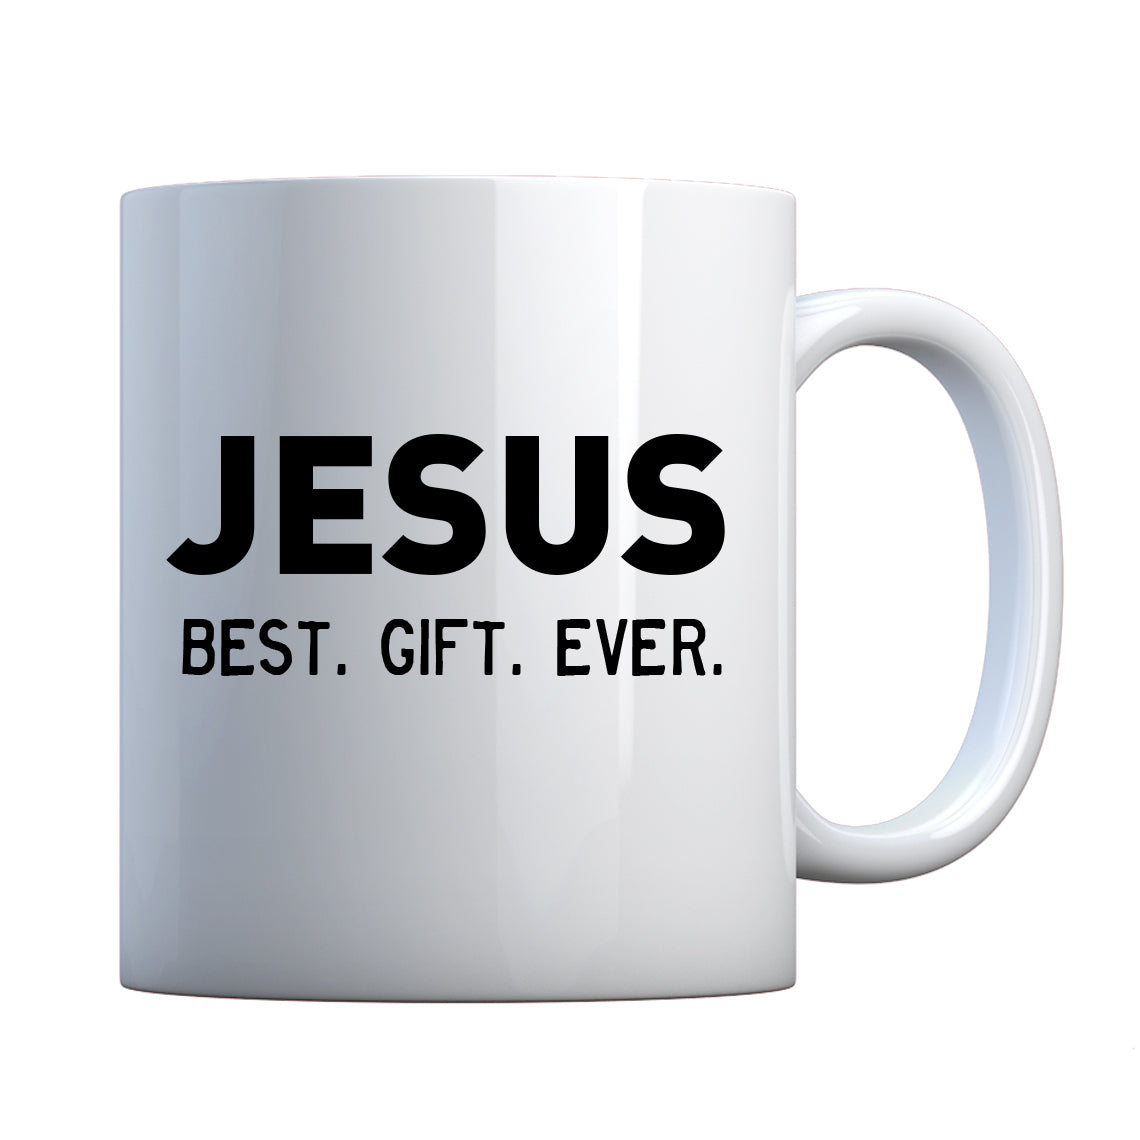 Jesus, Best. Gift. Ever. Ceramic Gift Mug